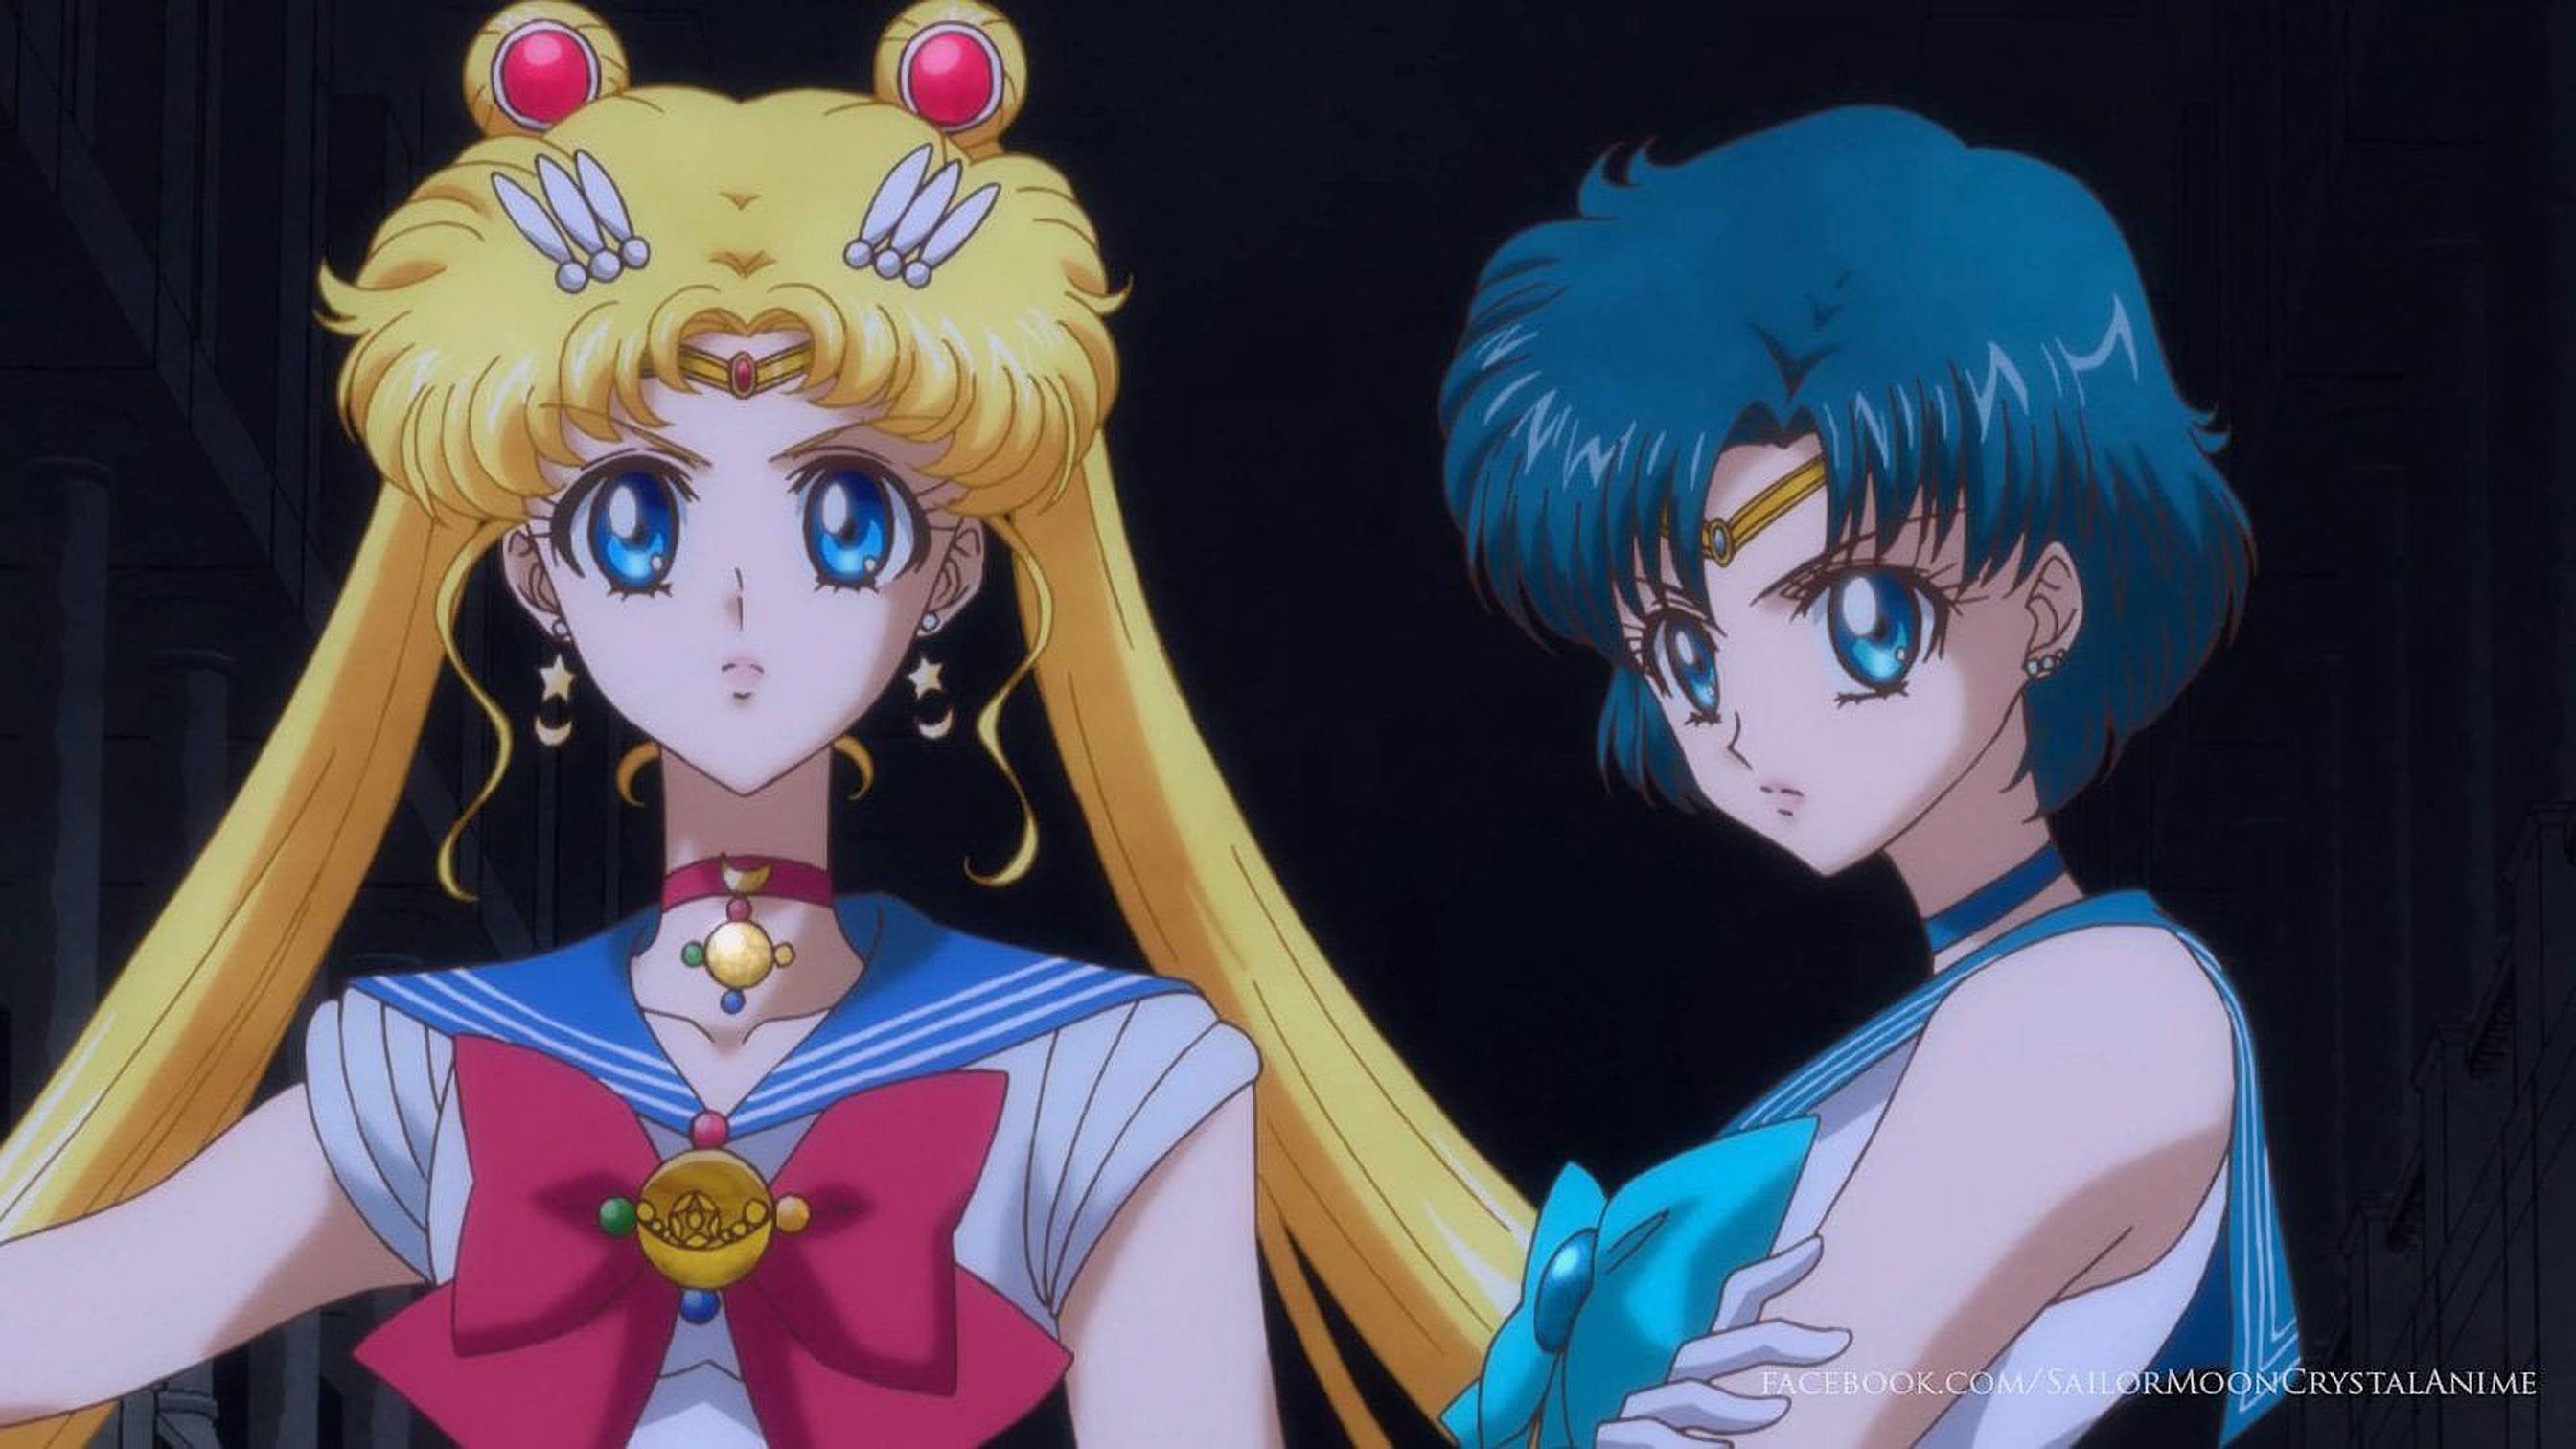 Sailor Moon Crystal: Season 3 (Limited Edition) (Blu-ray) 